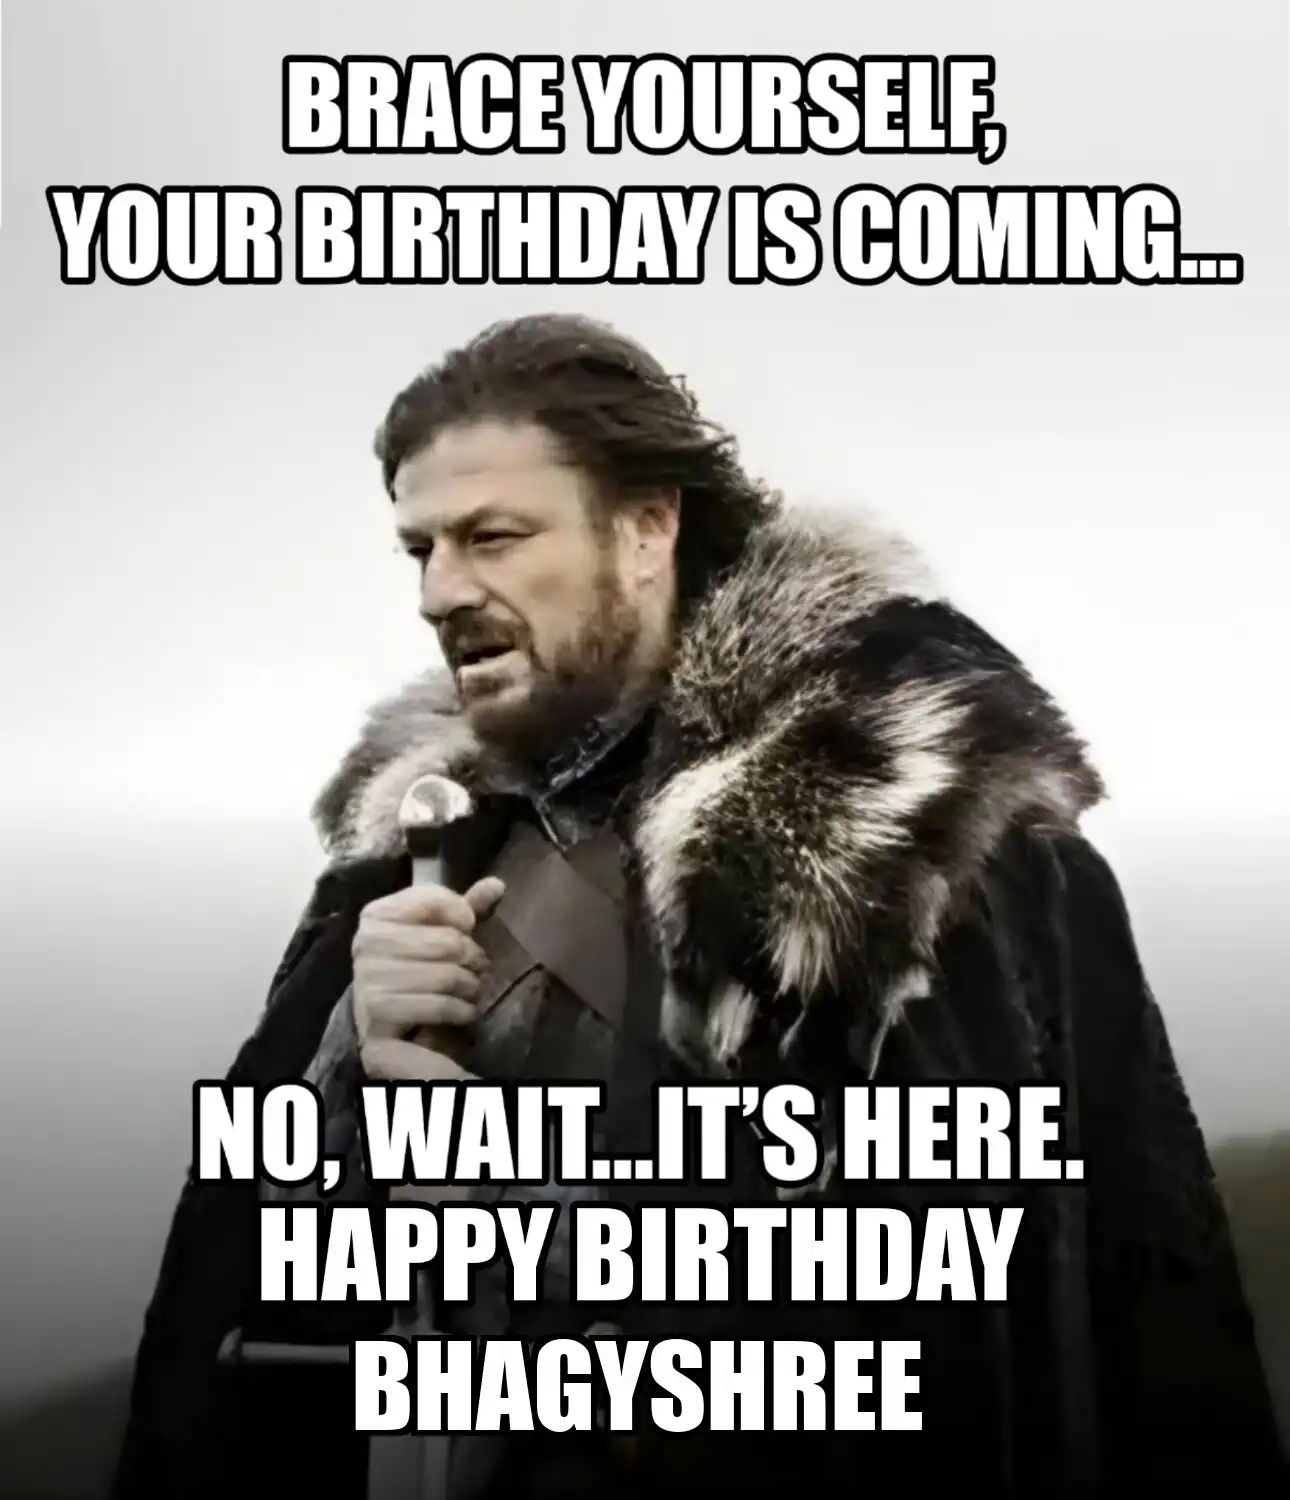 Happy Birthday Bhagyshree Brace Yourself Your Birthday Is Coming Meme